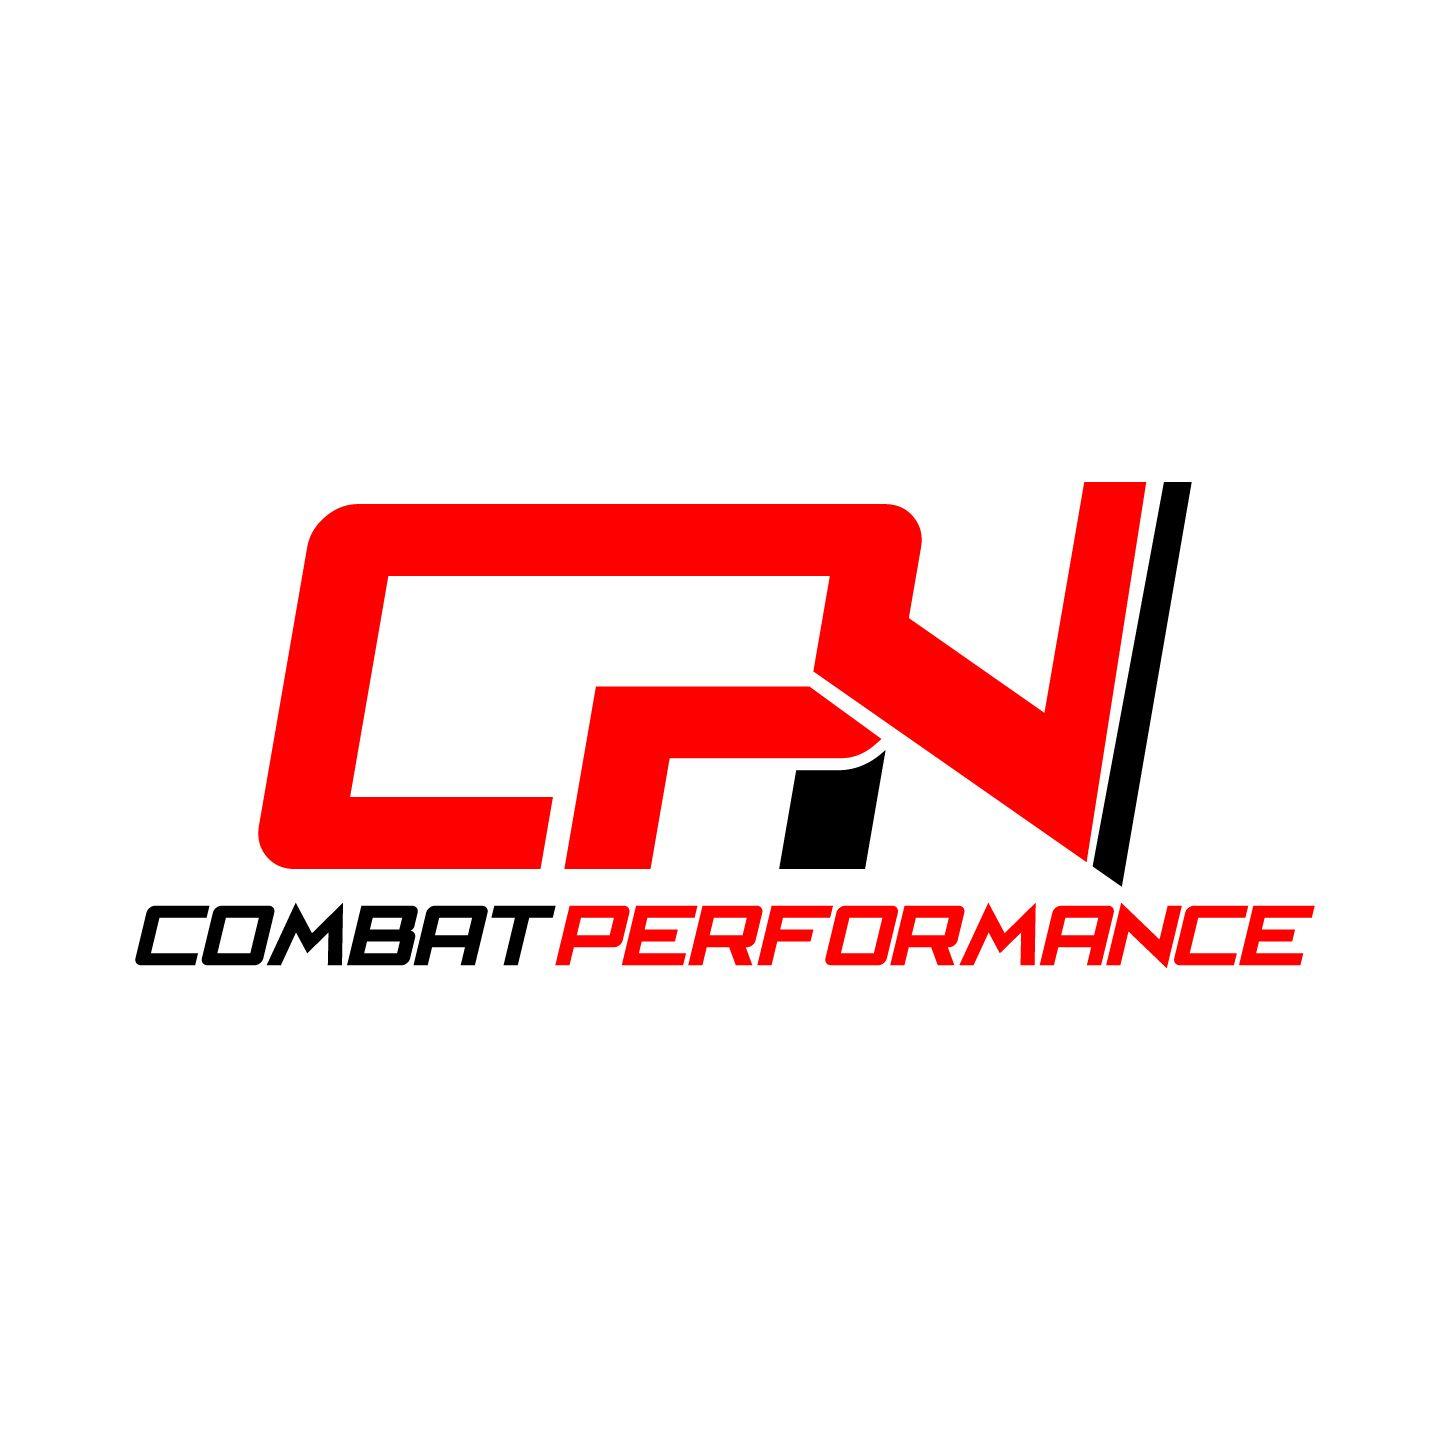 CPN Logo - Elegant, Playful, It Company Logo Design for CPN 